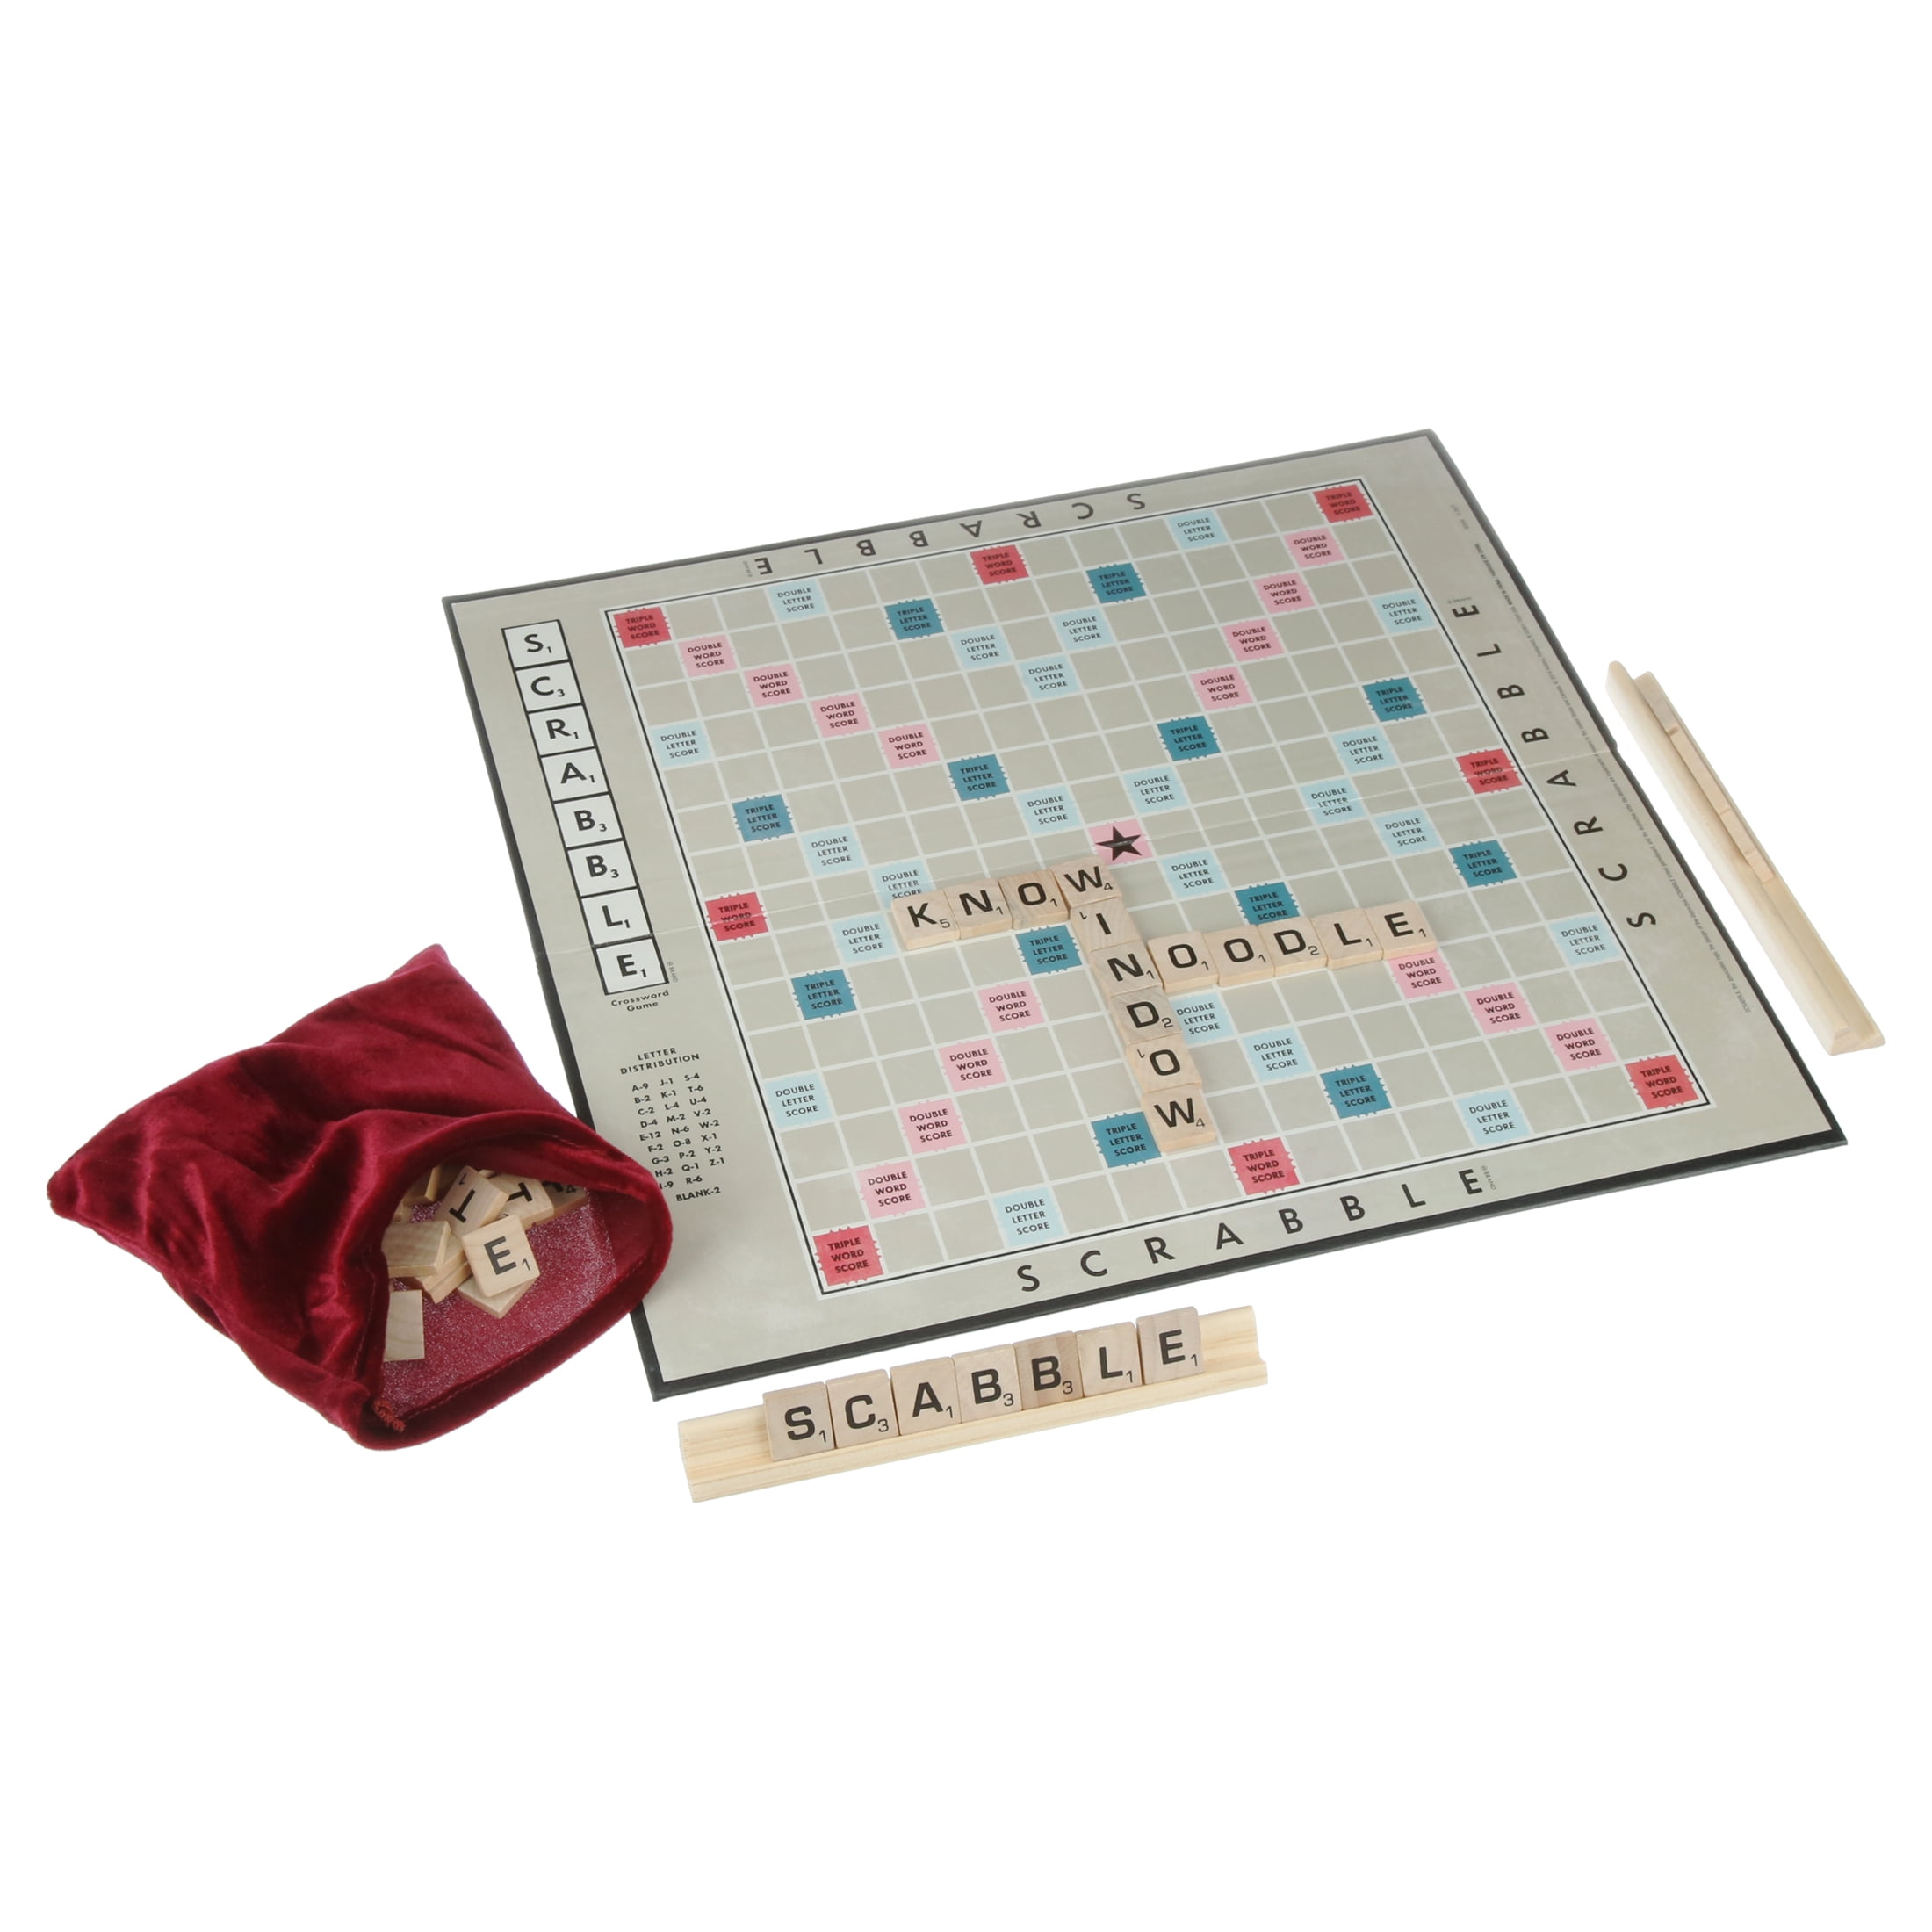 B2850 Hasbro Retro Series Scrabble 1949 Edition Game for sale online